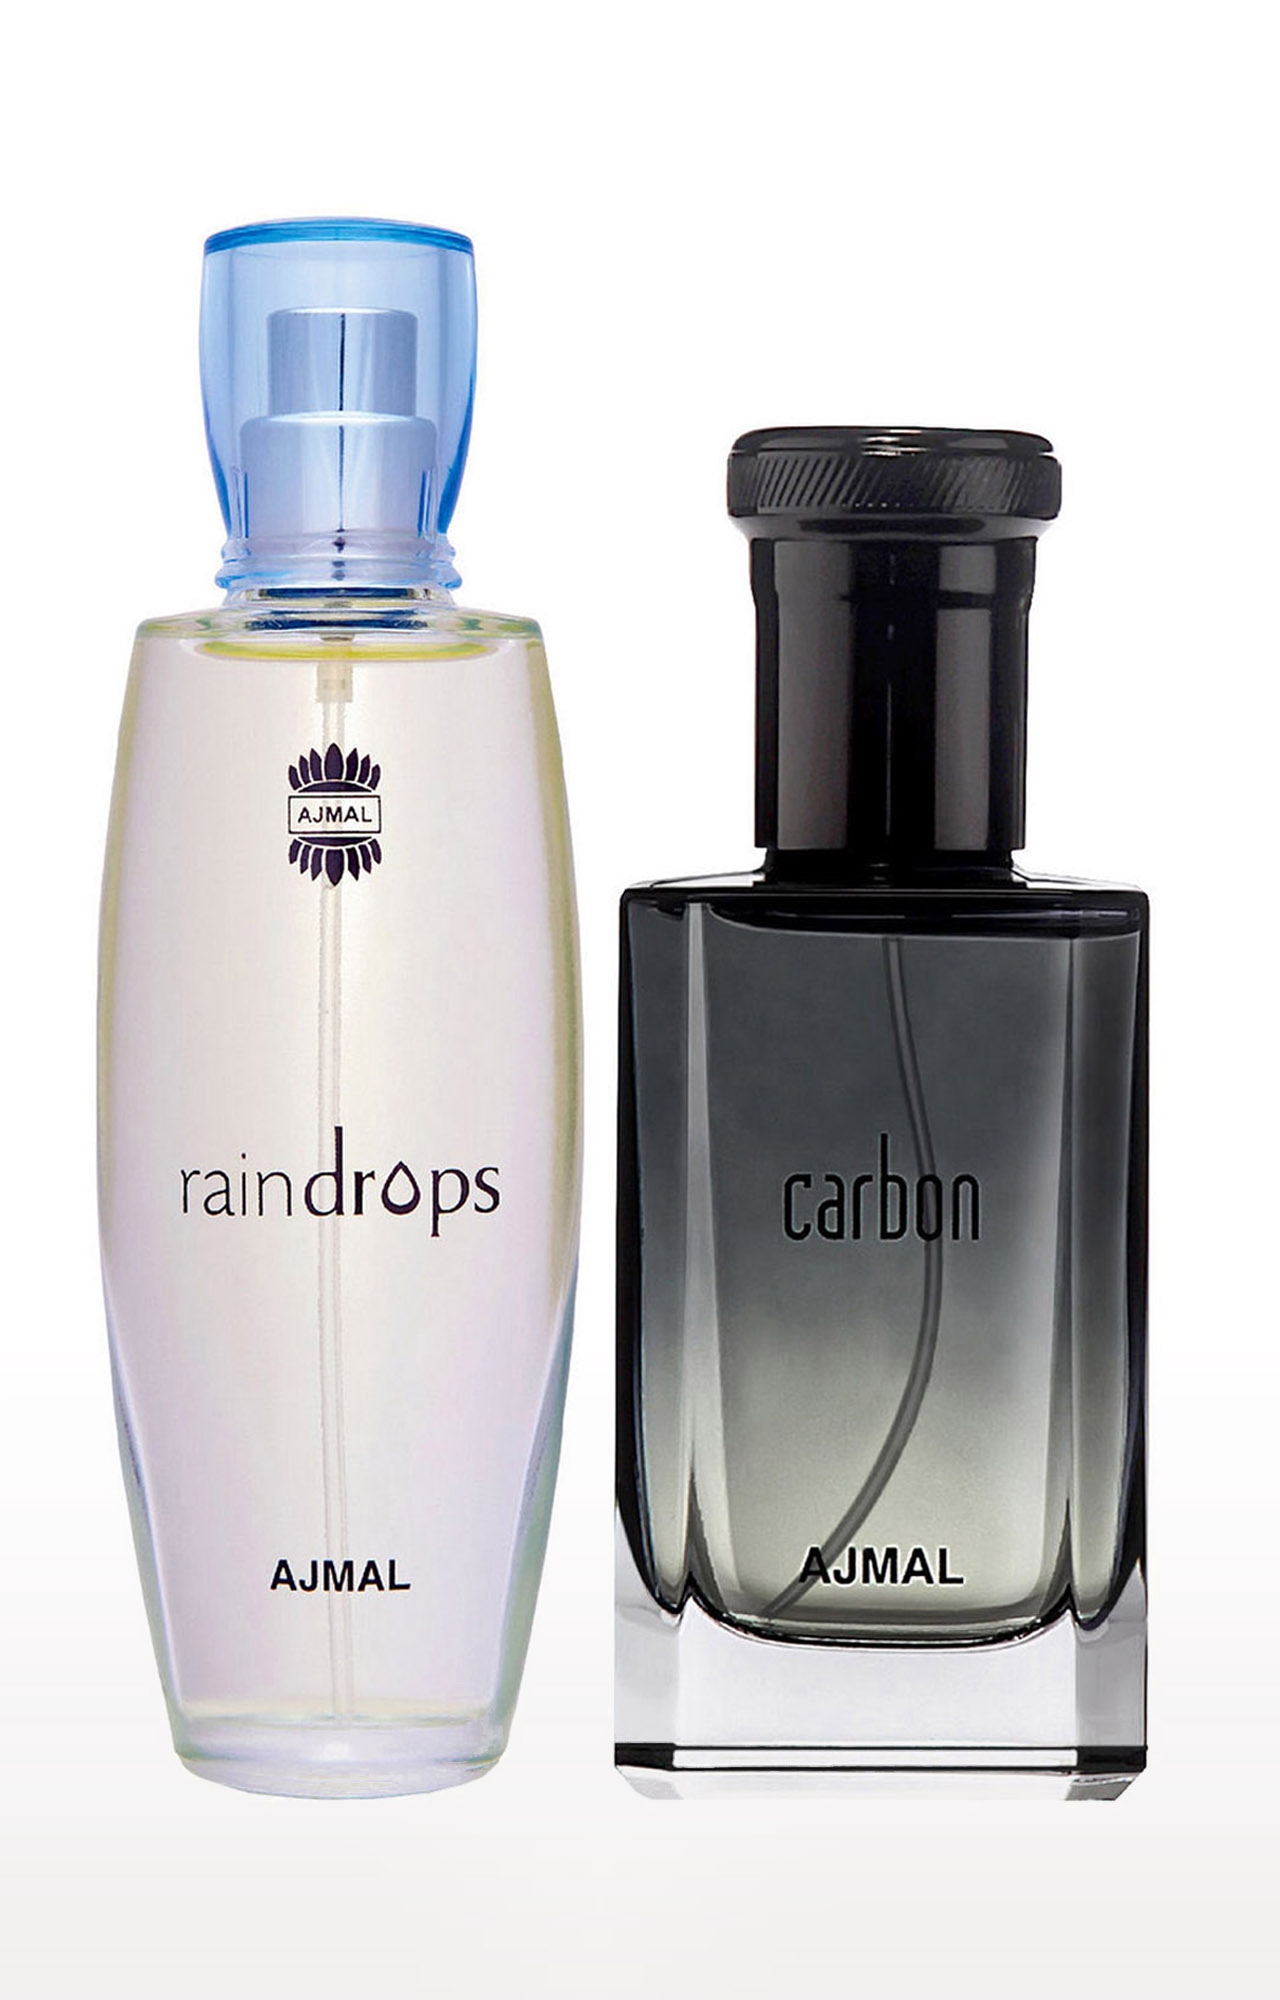 Ajmal Raindrops EDP Perfume 50ml for Women and Carbon EDP Perfume 100ml for Men